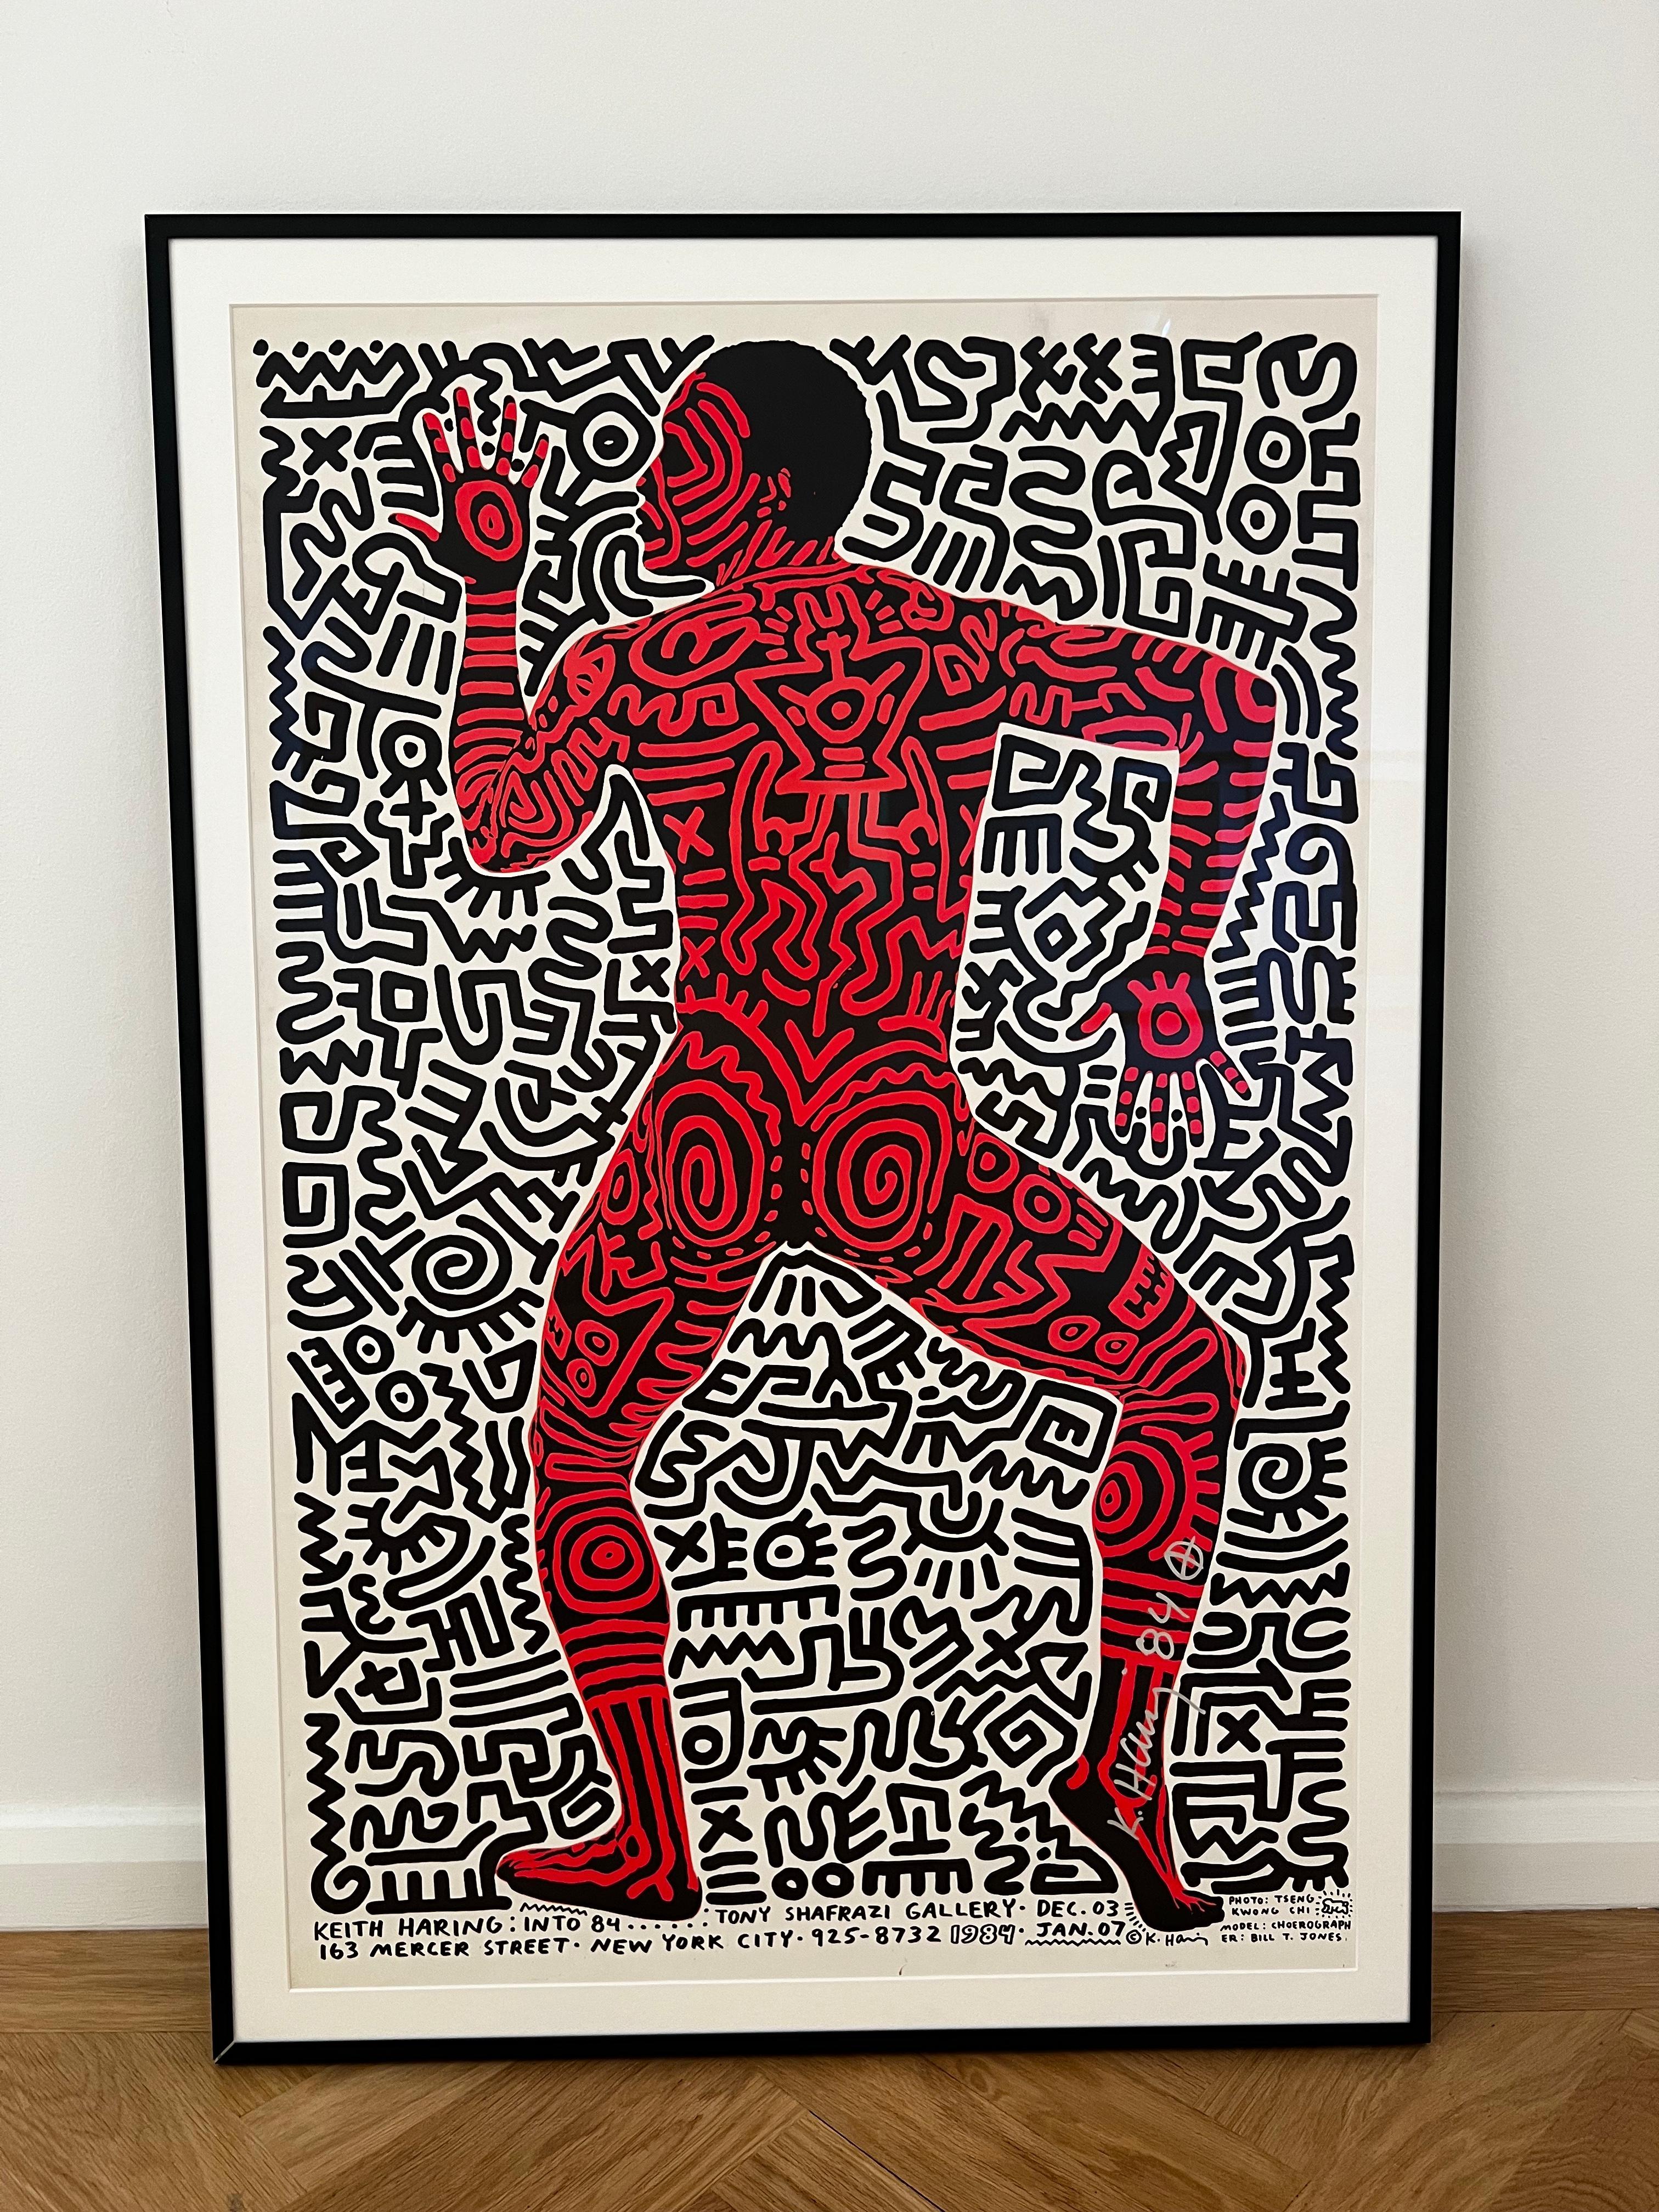 Into 84 - Keith Haring print, rare signature 1